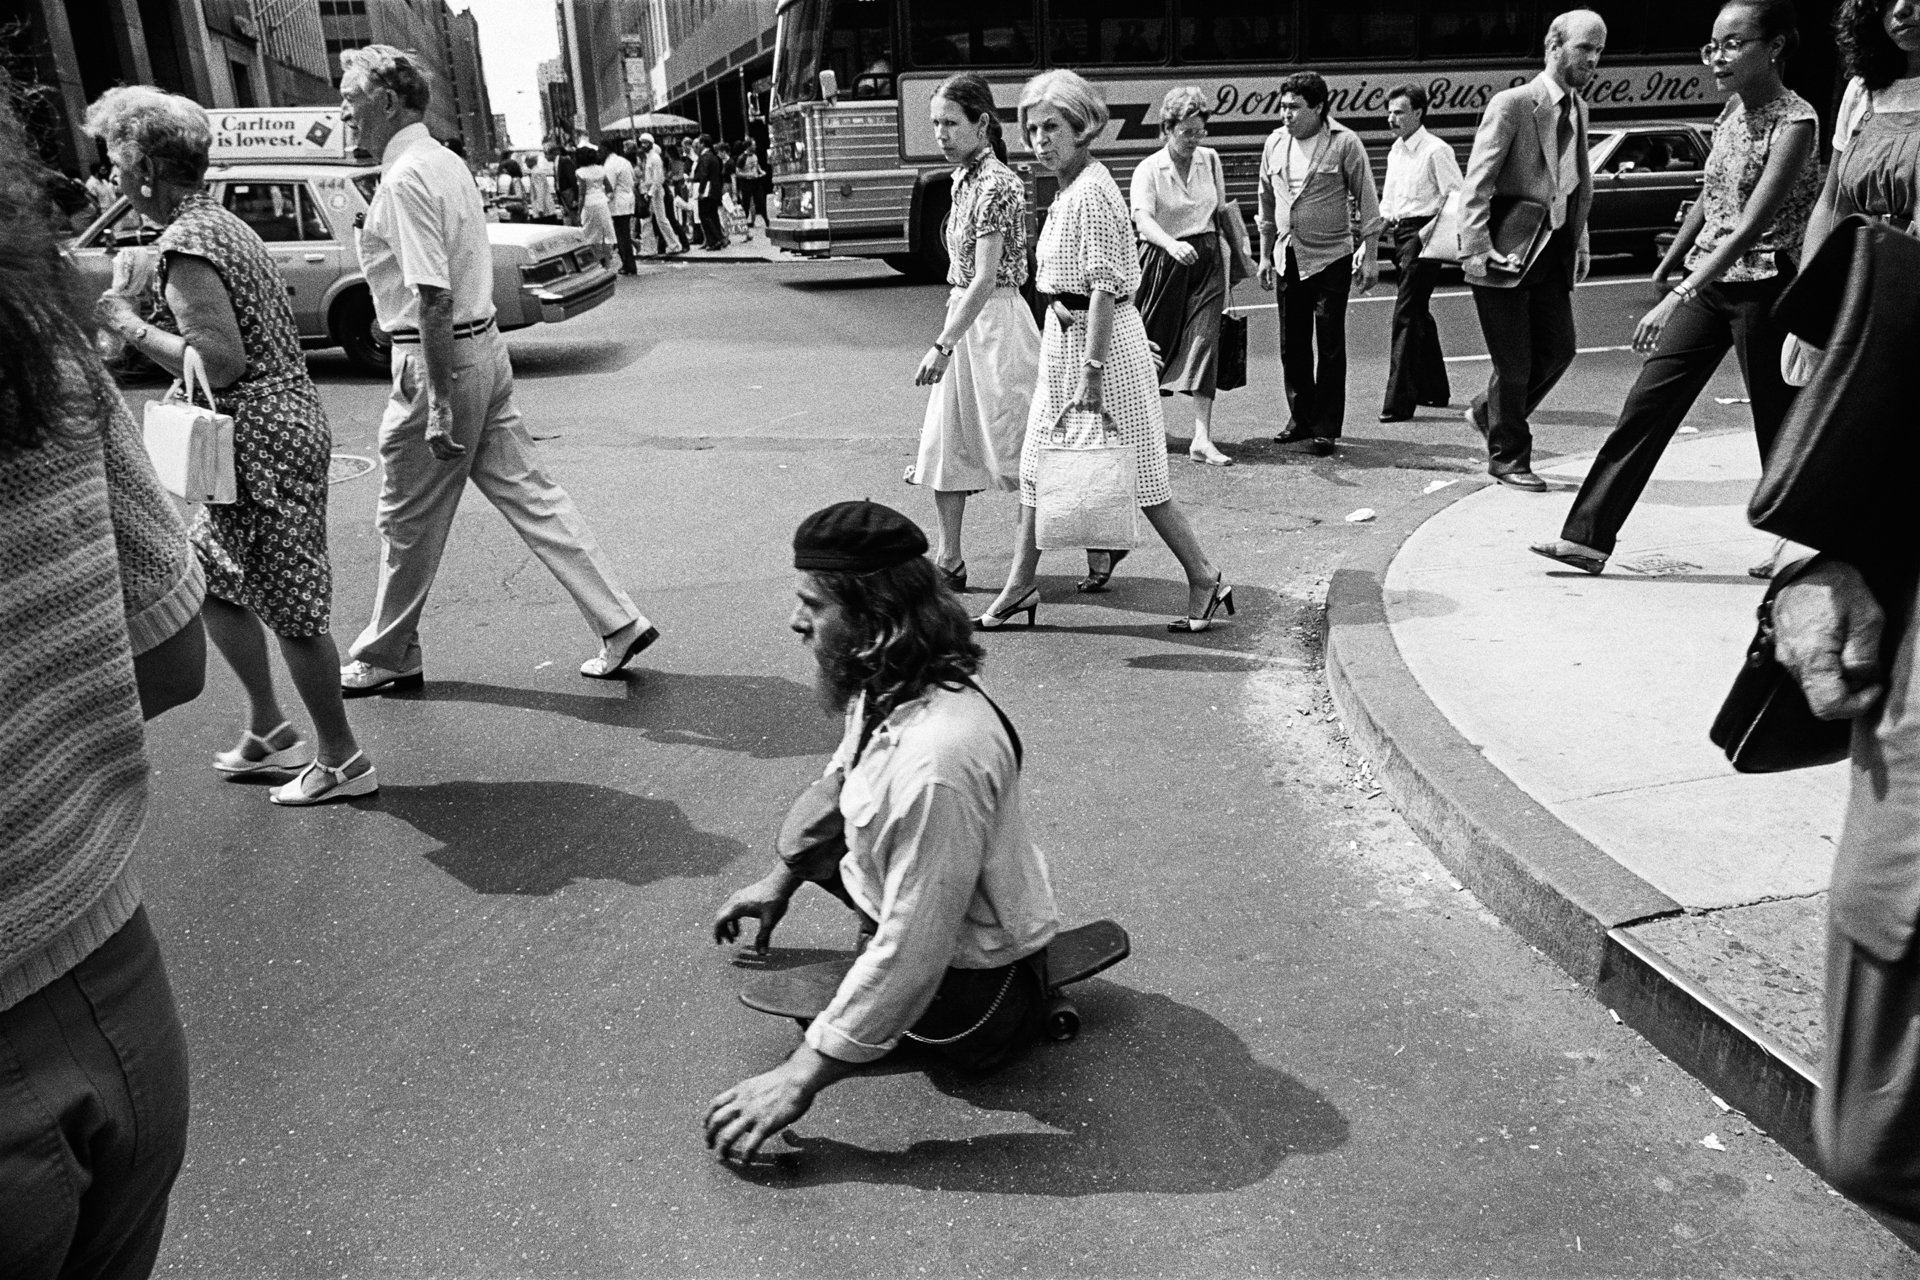 Man on Skateboard, 54th St., NYC, c. 1985